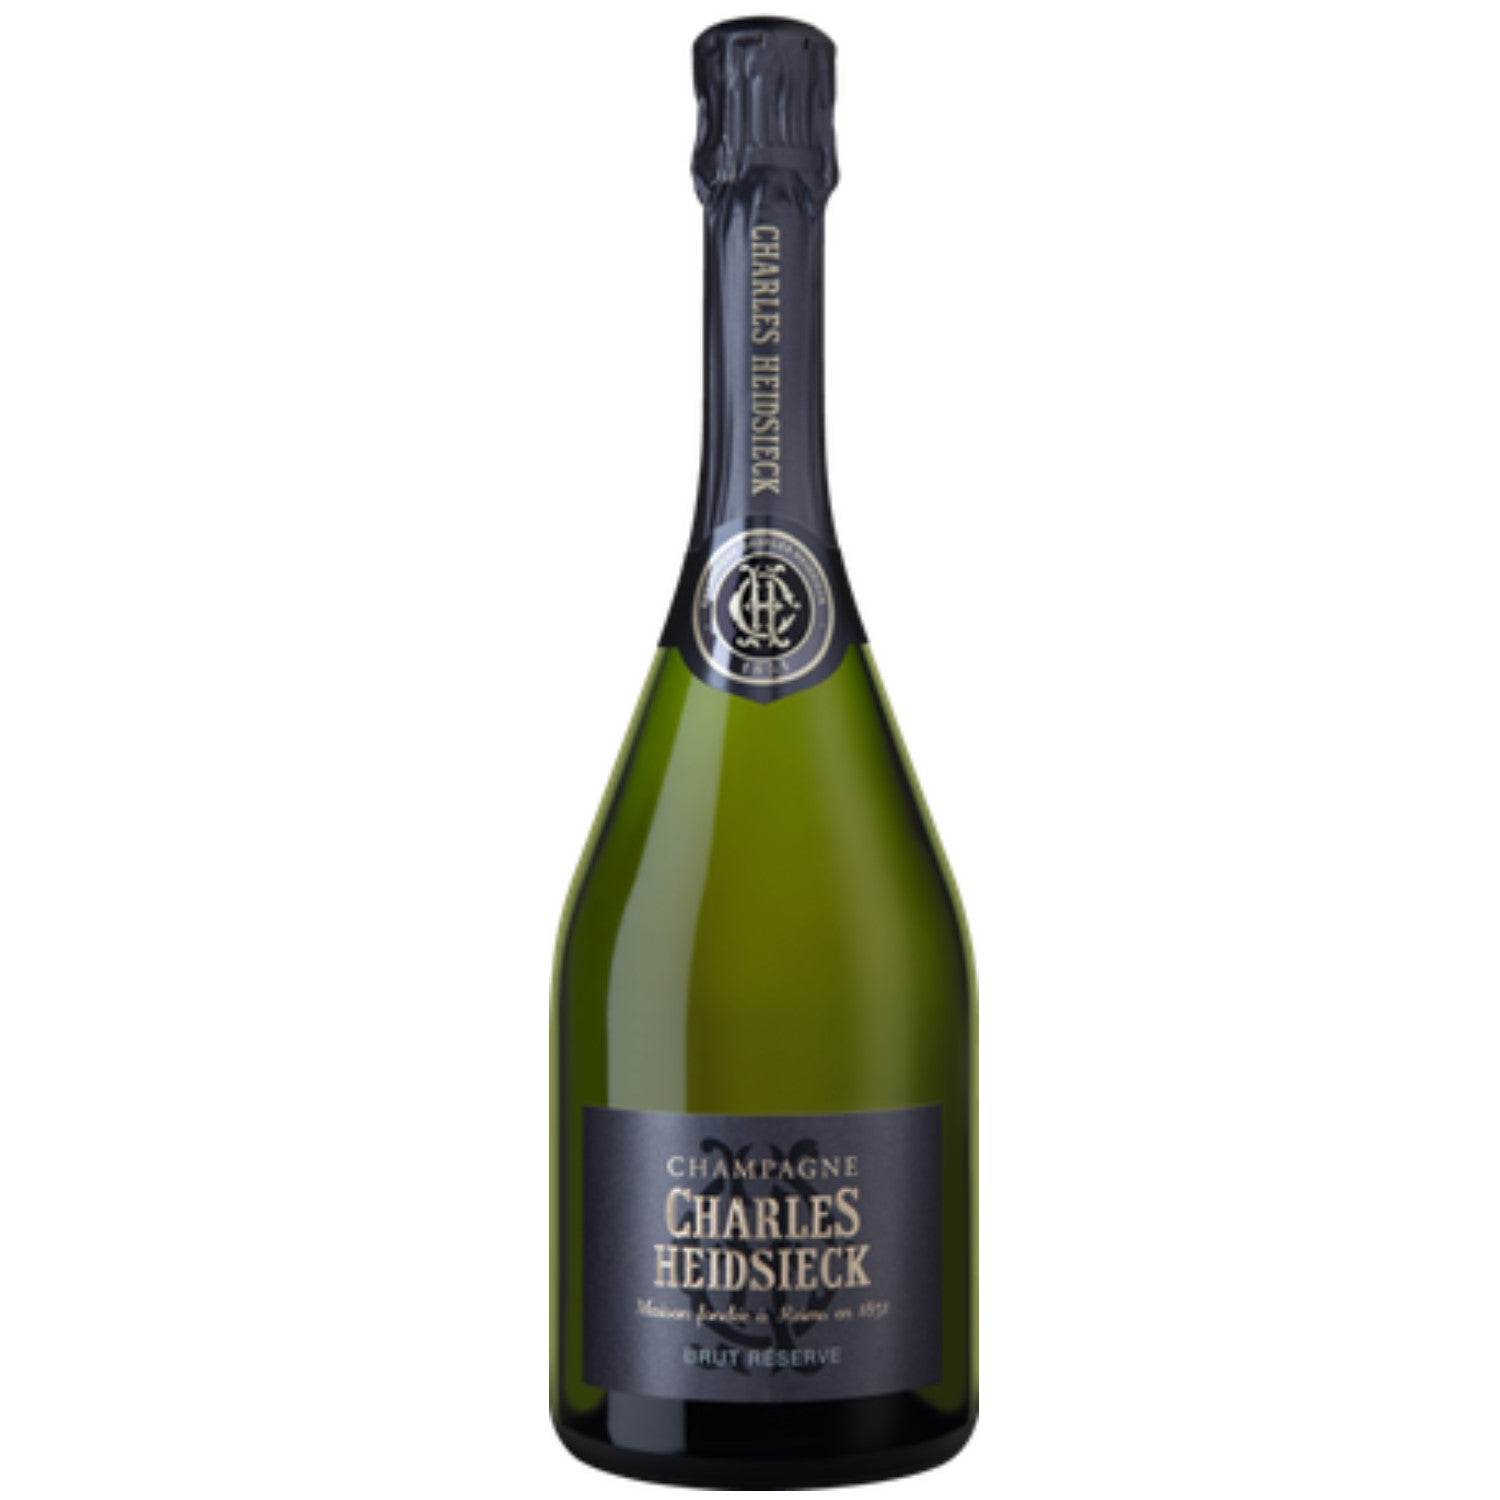 Charles Heidsieck Brut Réserve Champagne Champagner Cuvée veganer Schaumwein Frankreich (6 x 0.75l) - Versanel -